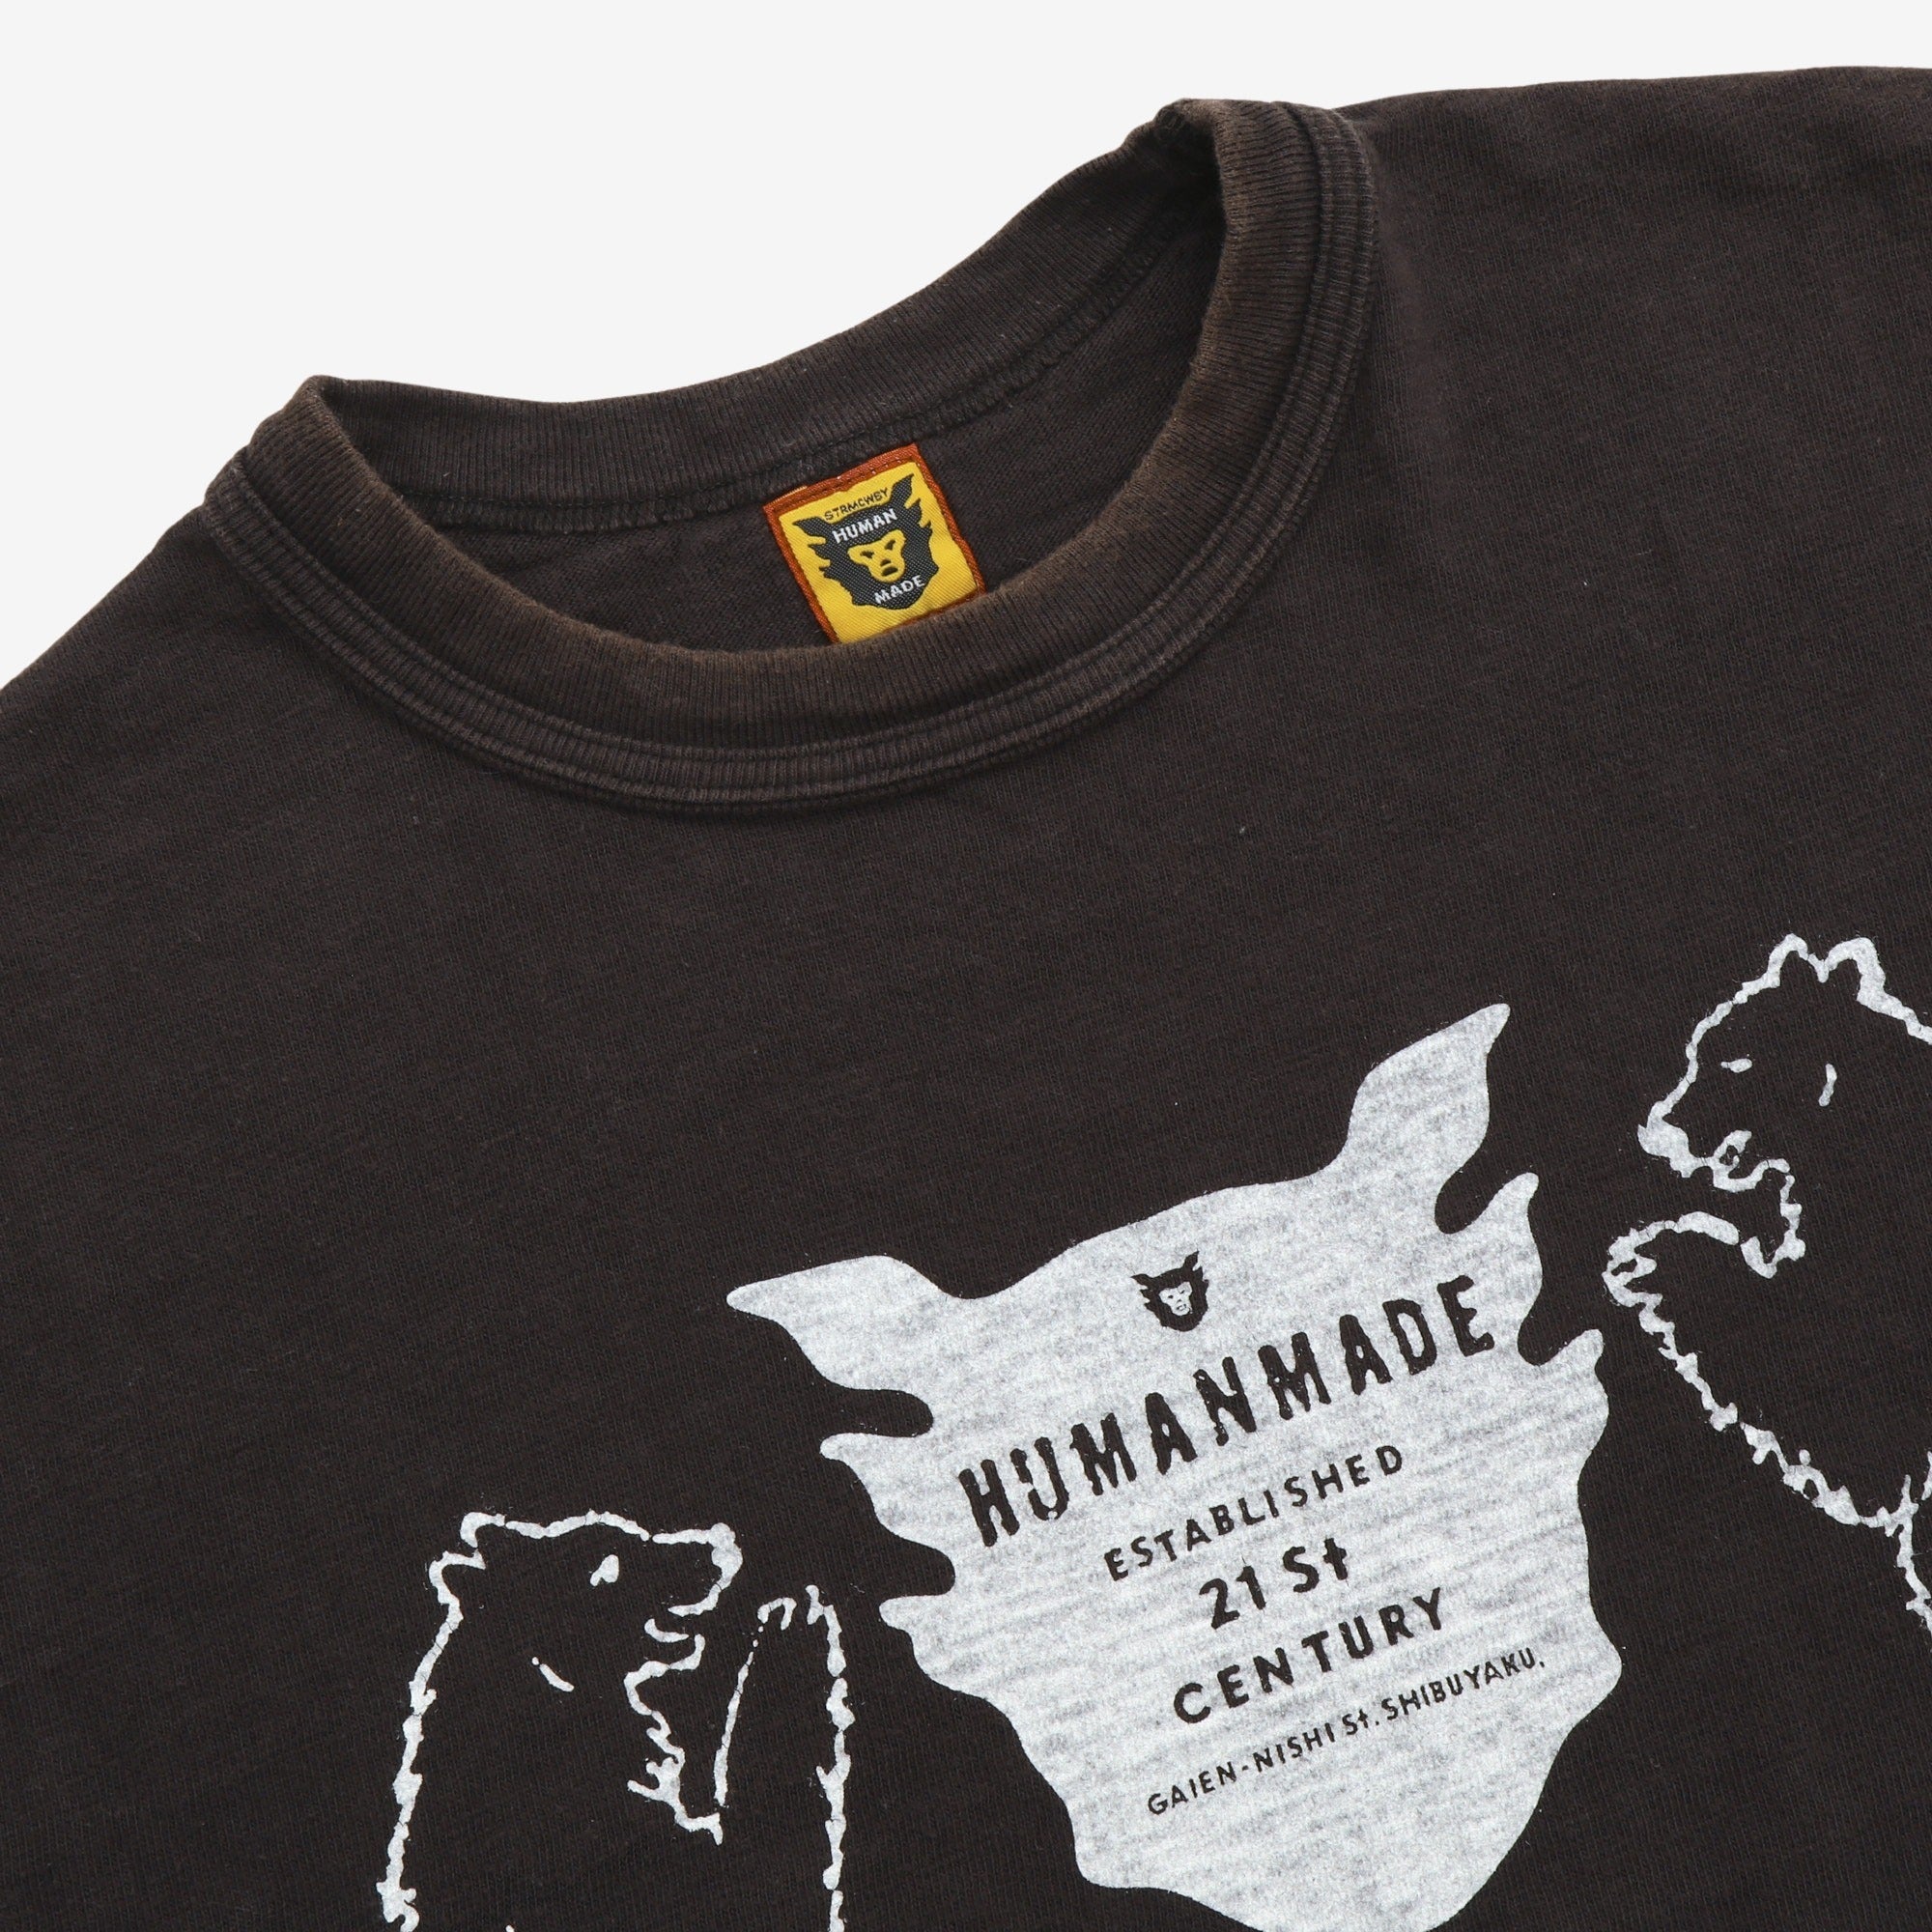 Human Made Graphic T-Shirt